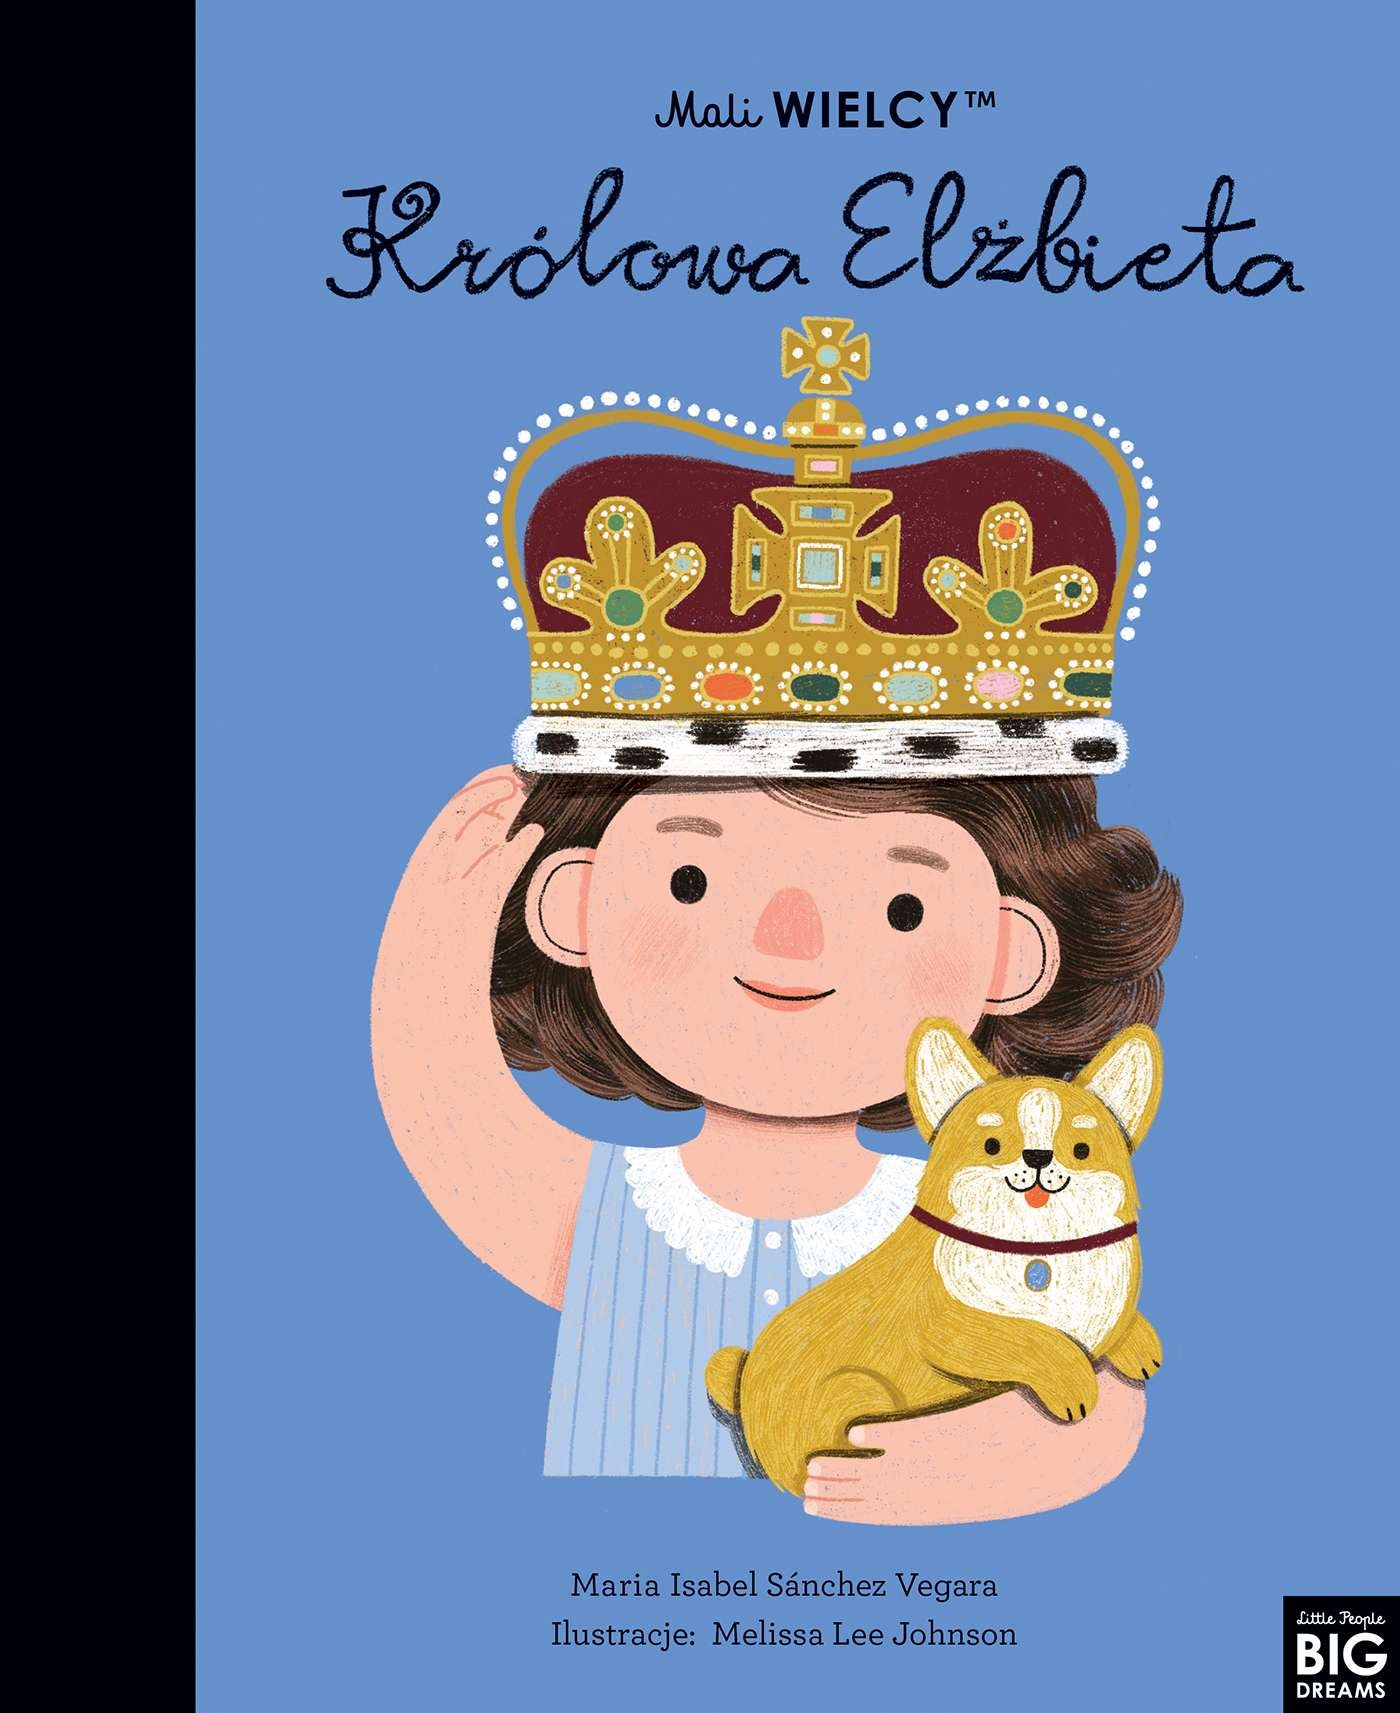 Libros inteligentes: Little Great. Reina Elizabeth